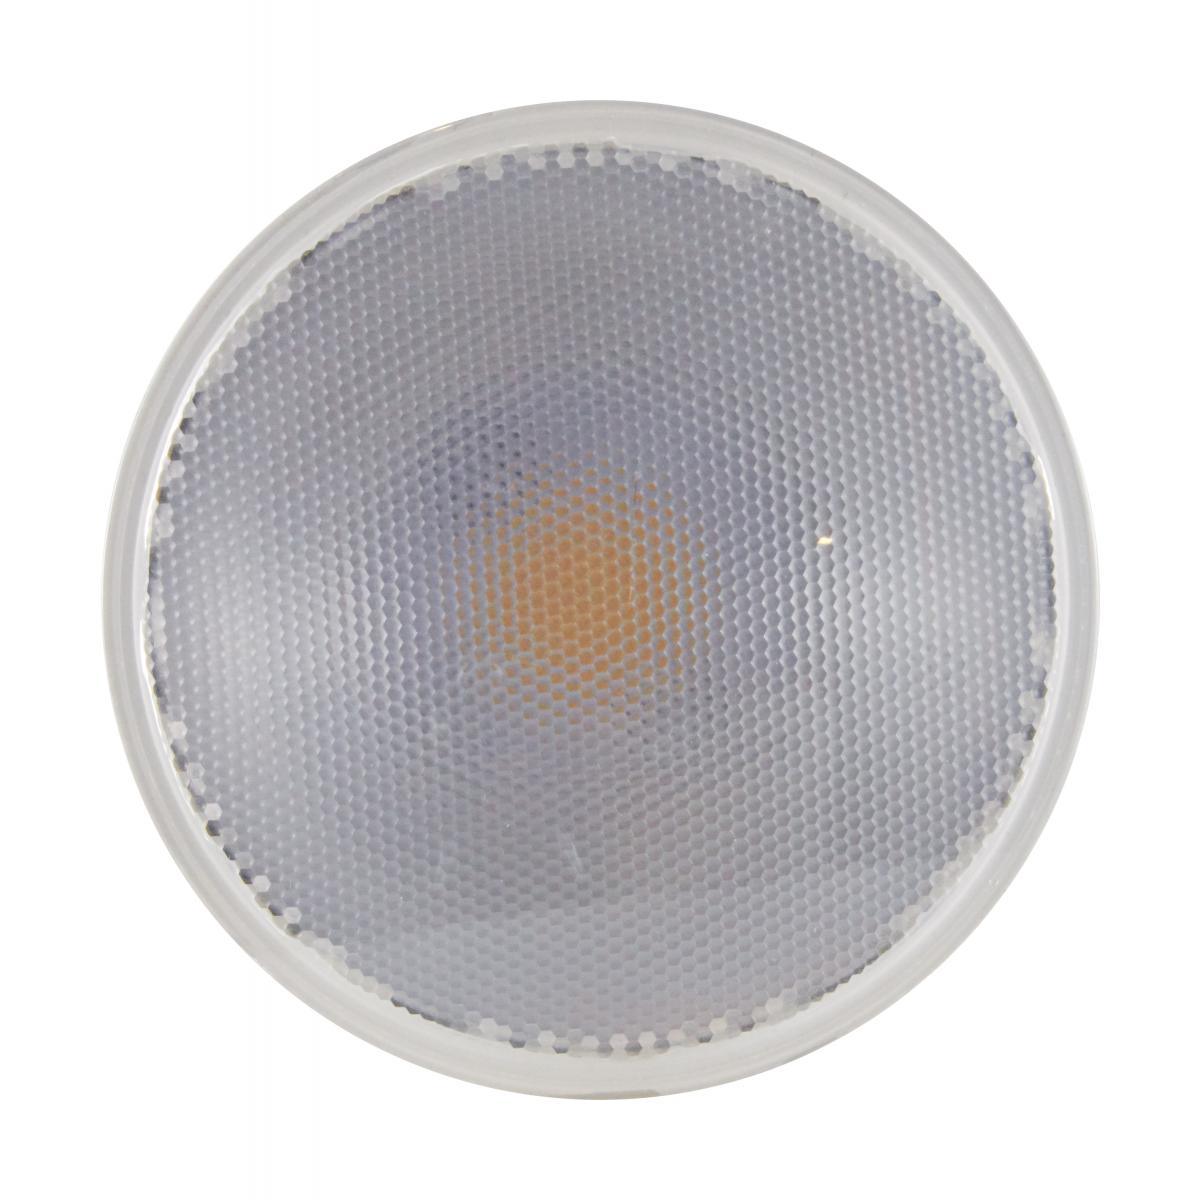 PAR38 Reflector LED Bulb, 17 watt, 1400 Lumens, 4000K, E26 Medium Base, 40 Deg. Flood - Bees Lighting